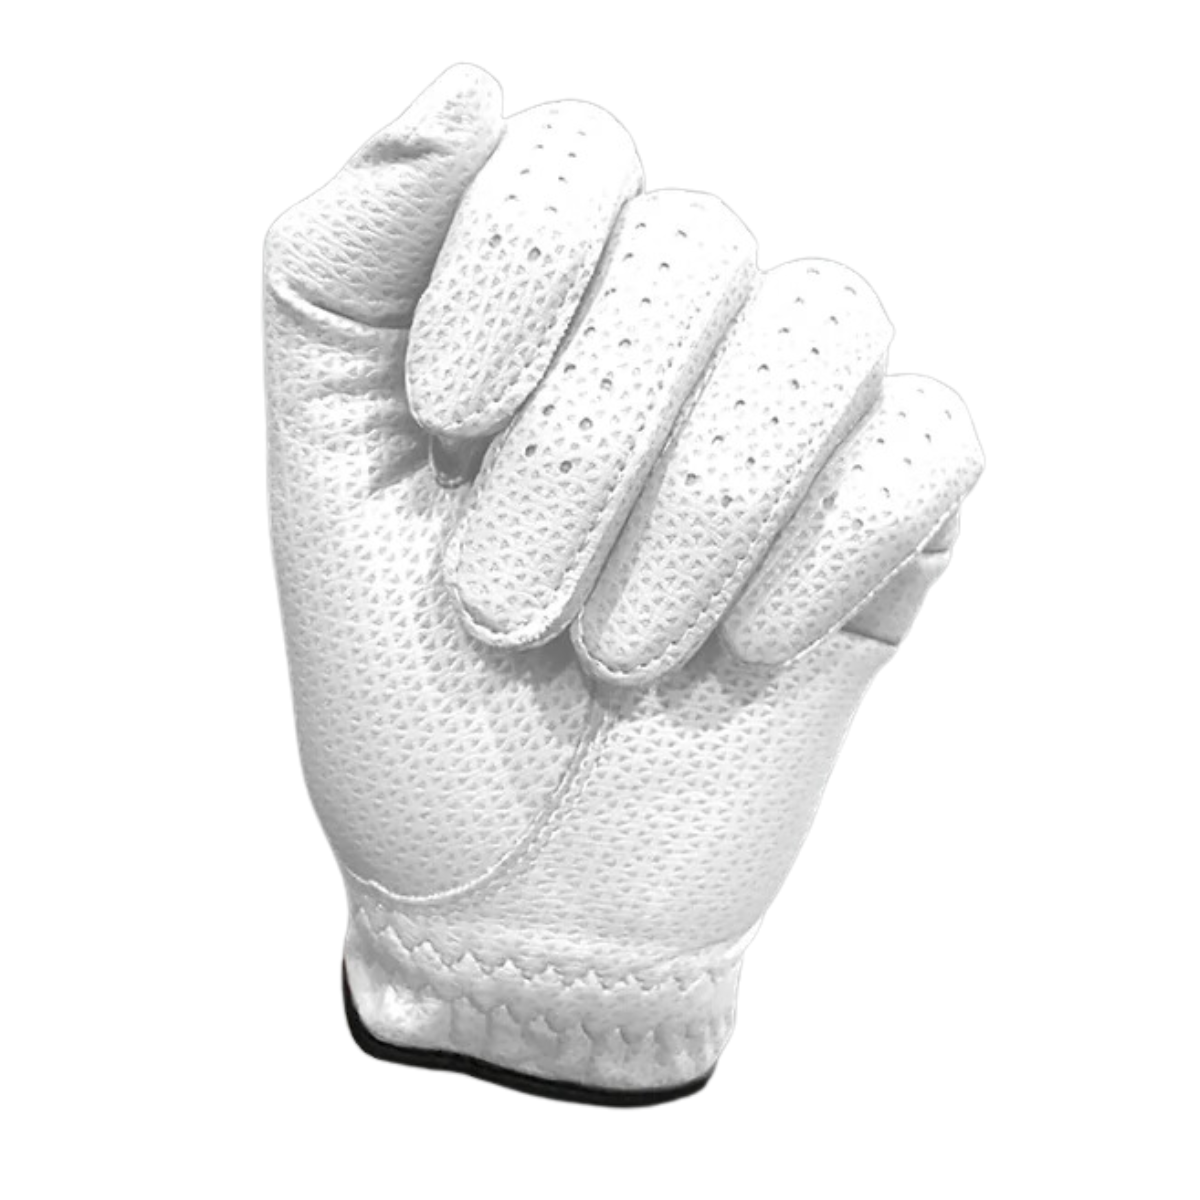 Fit39 Ex Professional Golf Glove